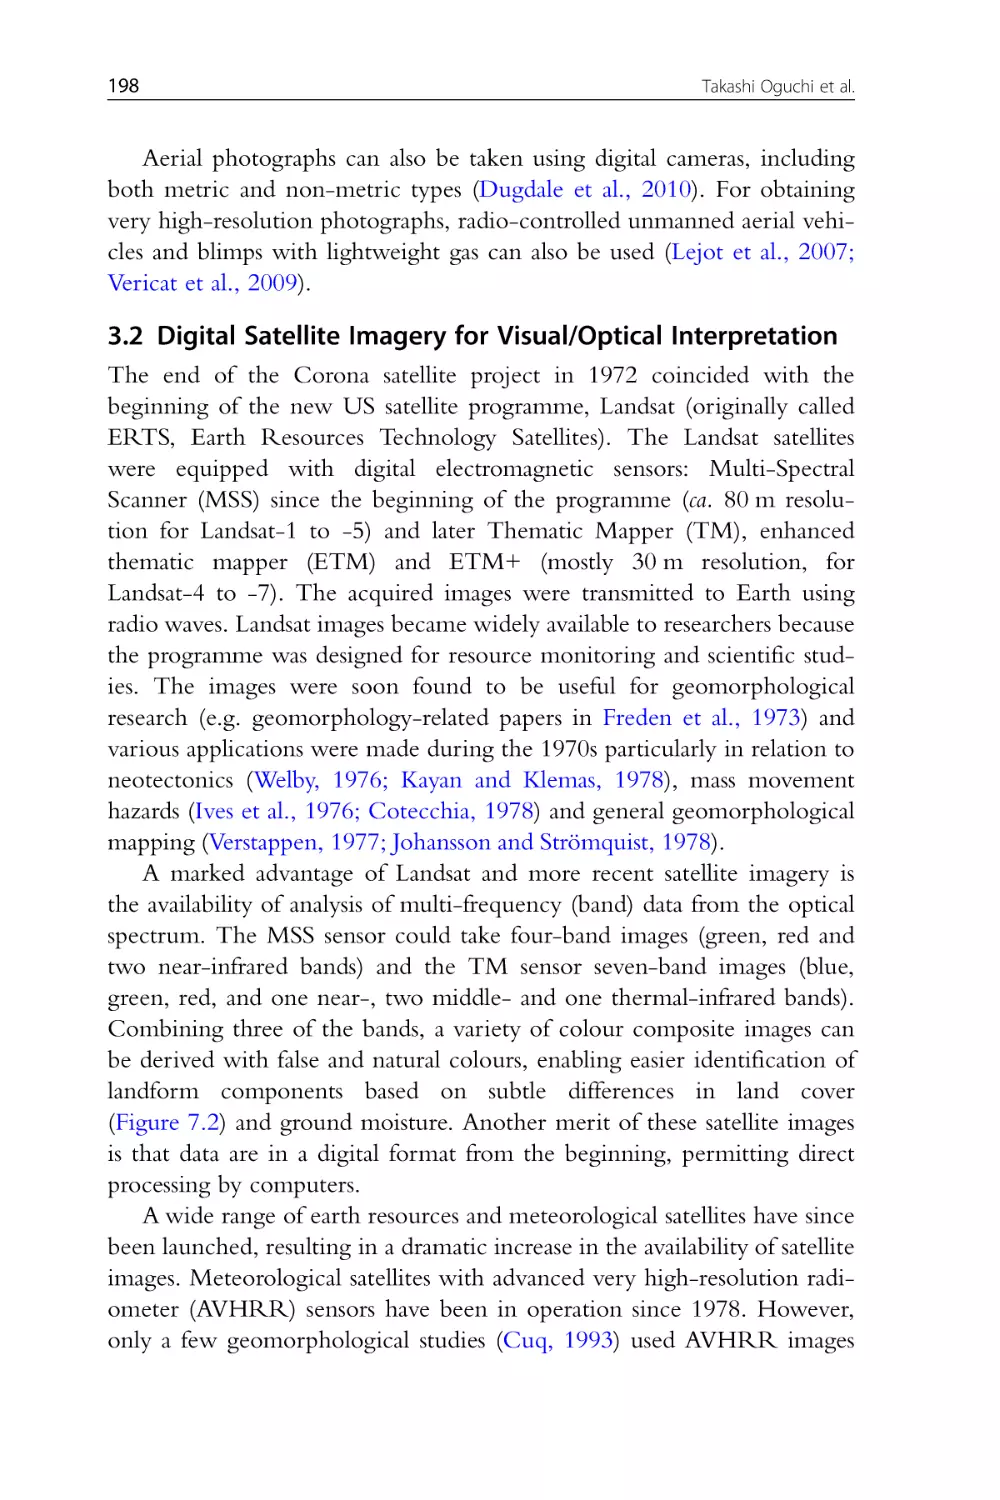 3.2 Digital Satellite Imagery for Visual/Optical Interpretation